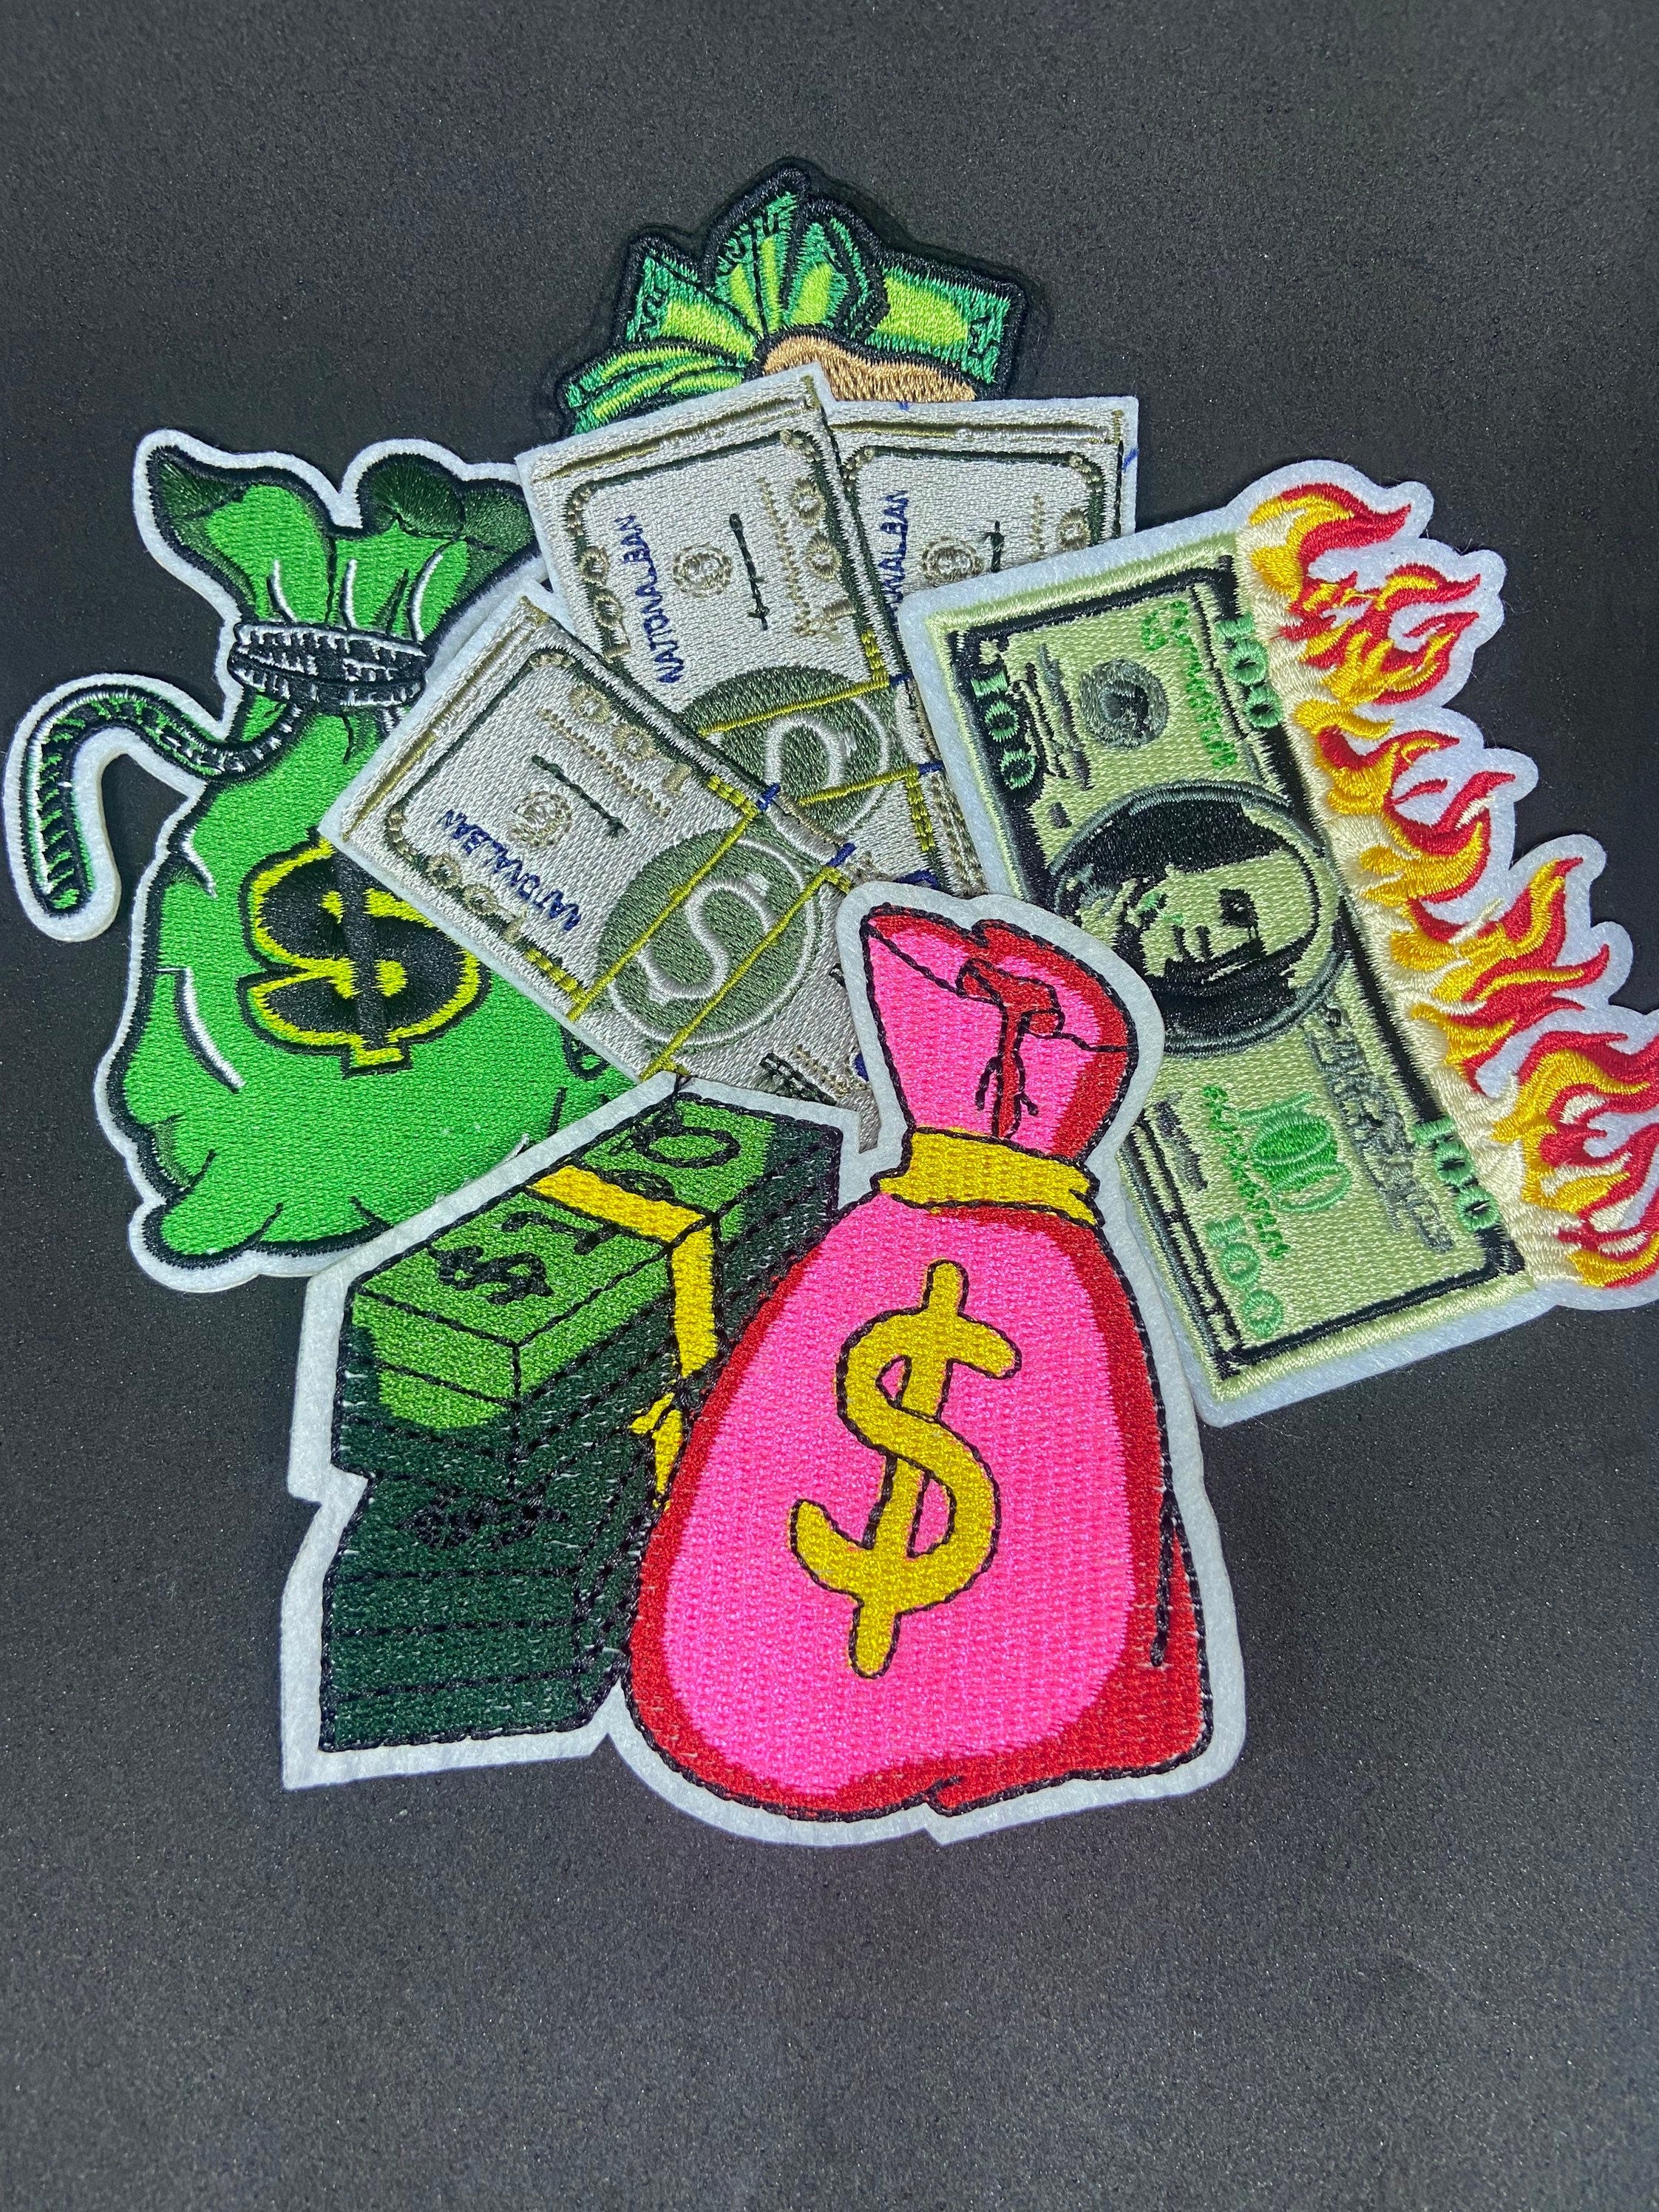 Money Bag Images - Free Download on Freepik